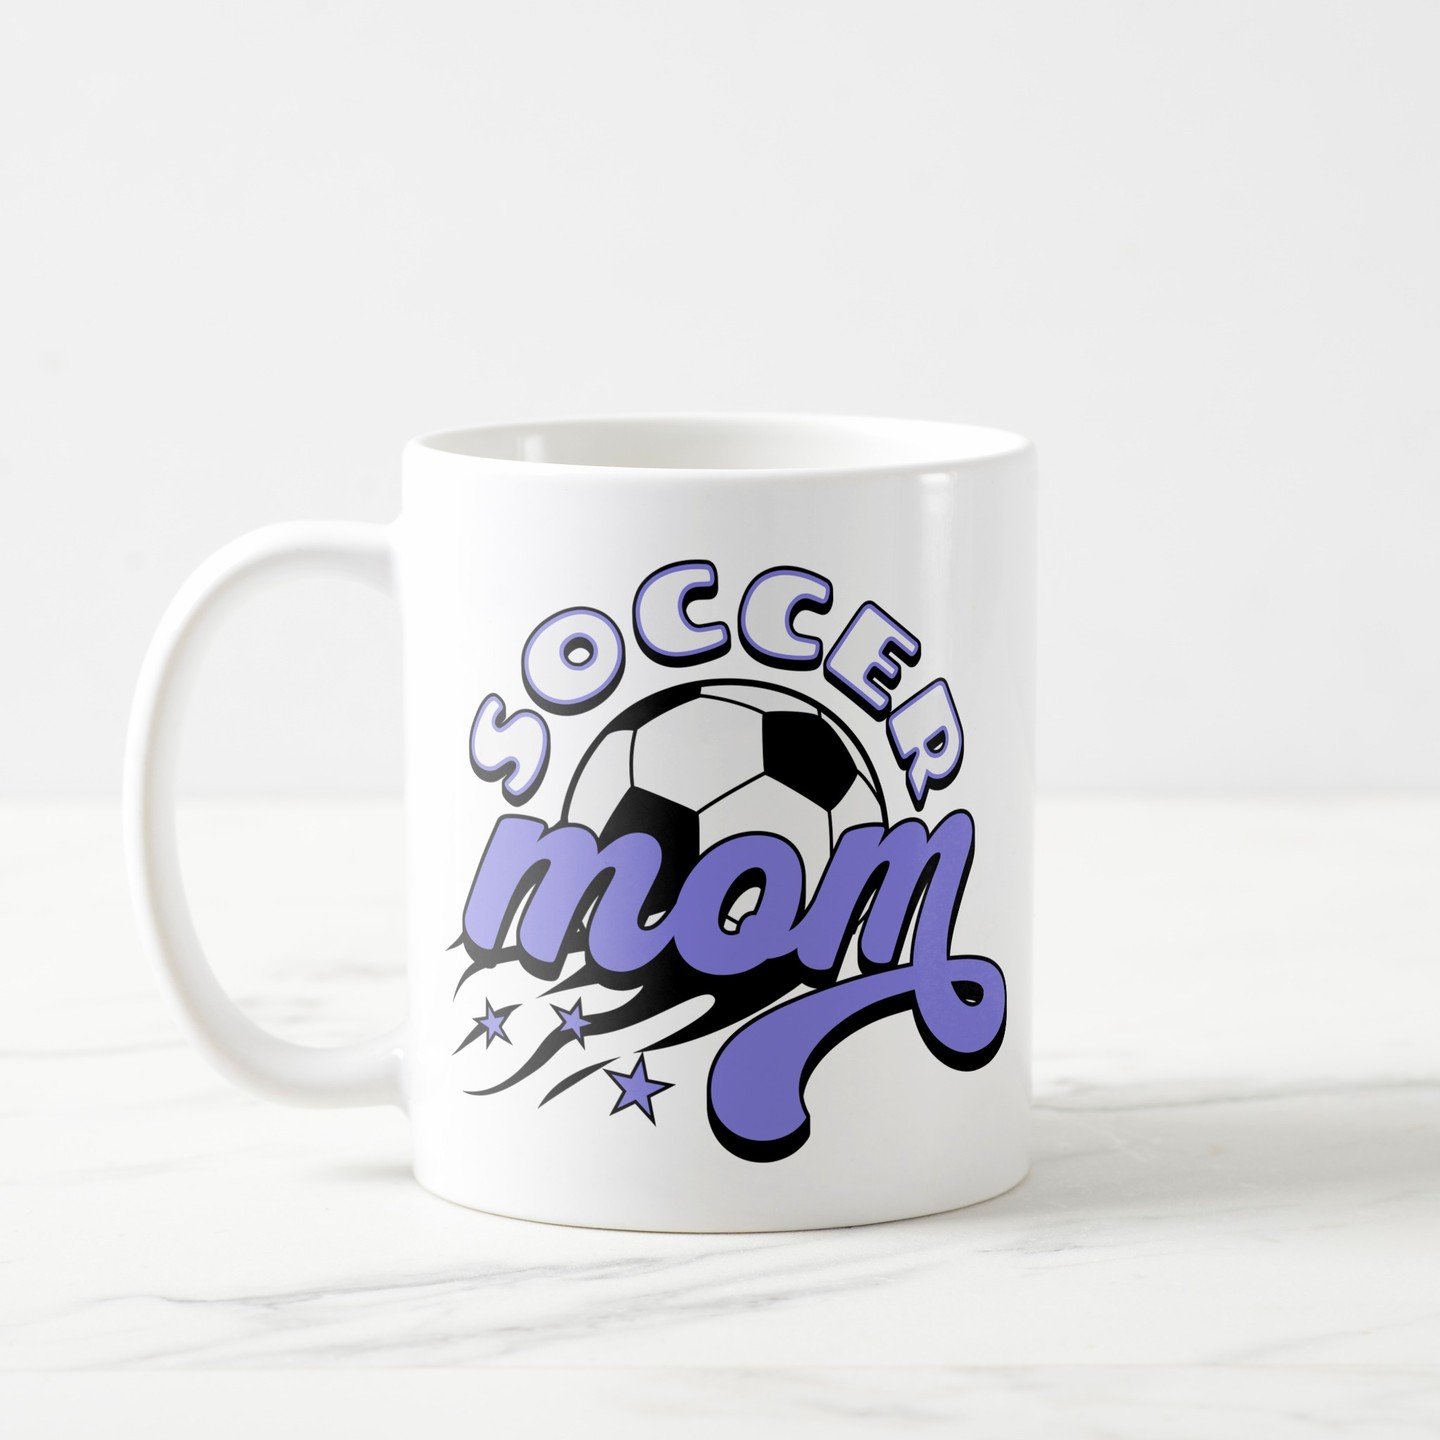 For the Soccer Mom! #linkinbio
.
#zazzle #redbubble #teepublic #zazzlemade #shirt #stickers #mugs #mothersday #formom #soccermom #soccer